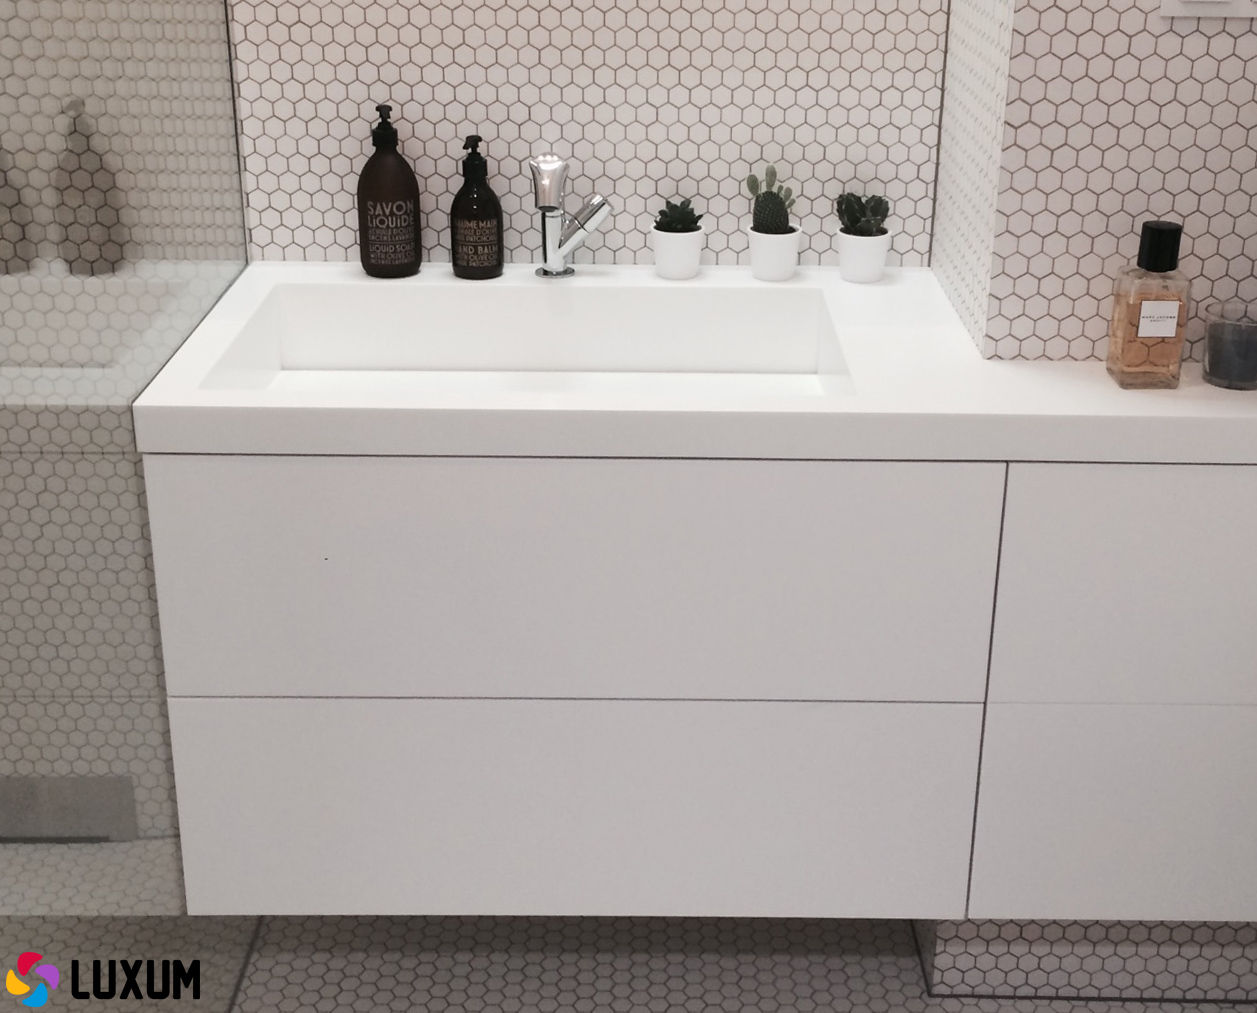 Minimalistyczna umywalka od Luxum, Luxum Luxum Minimalist style bathrooms